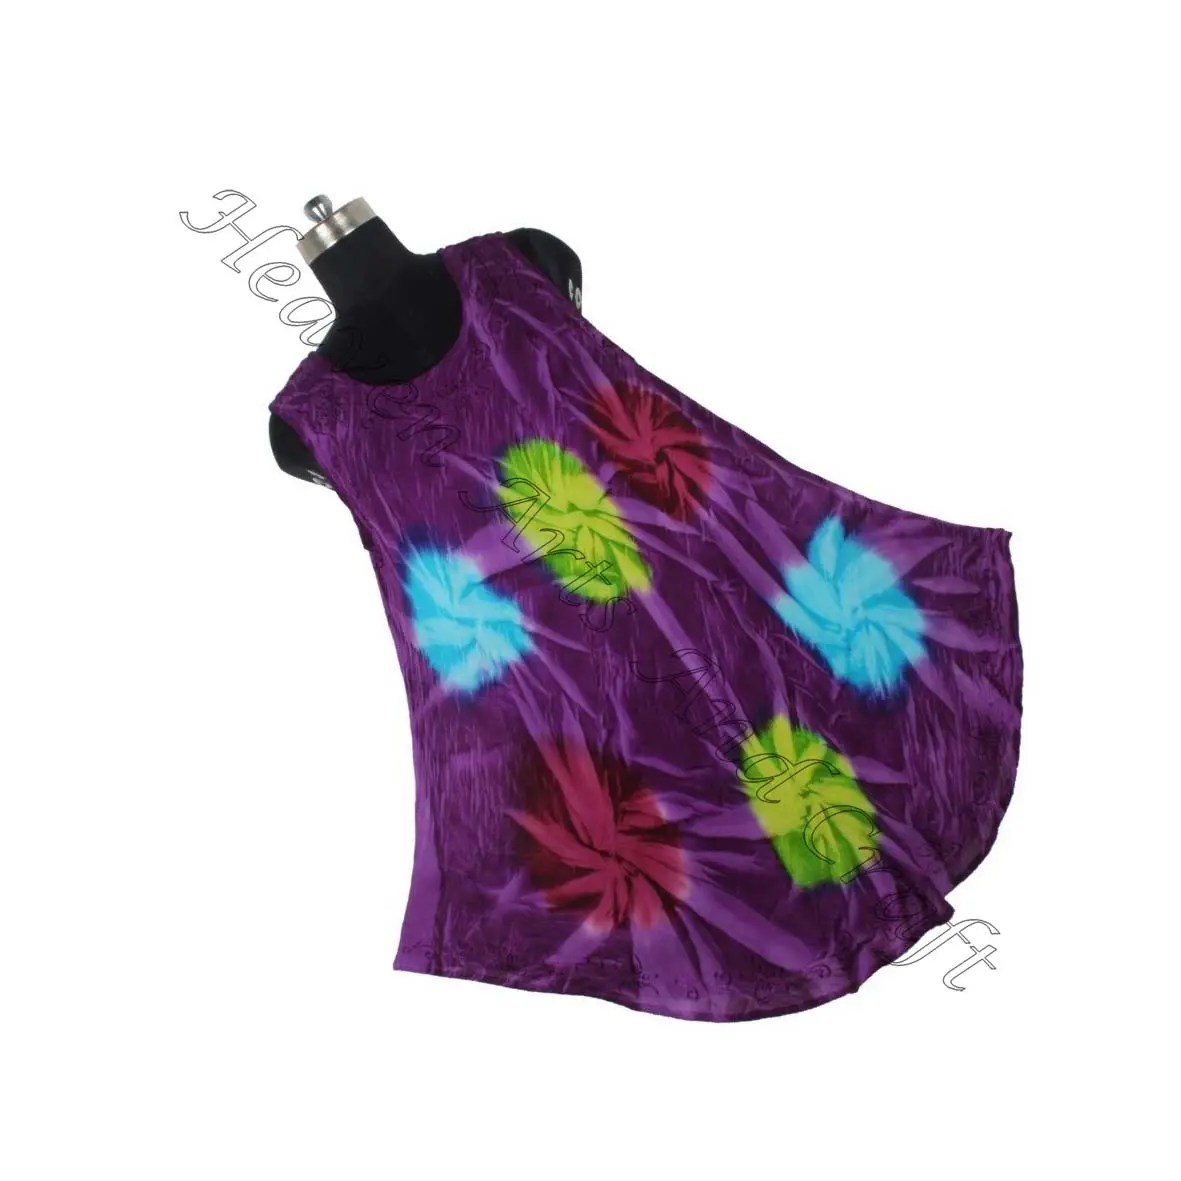 Most Fabulous Long Loose Fitting Tie Dye Maxi Dress Perfect Comfortable Beach Wear Or Resort Wear Women Dress For Summer Season